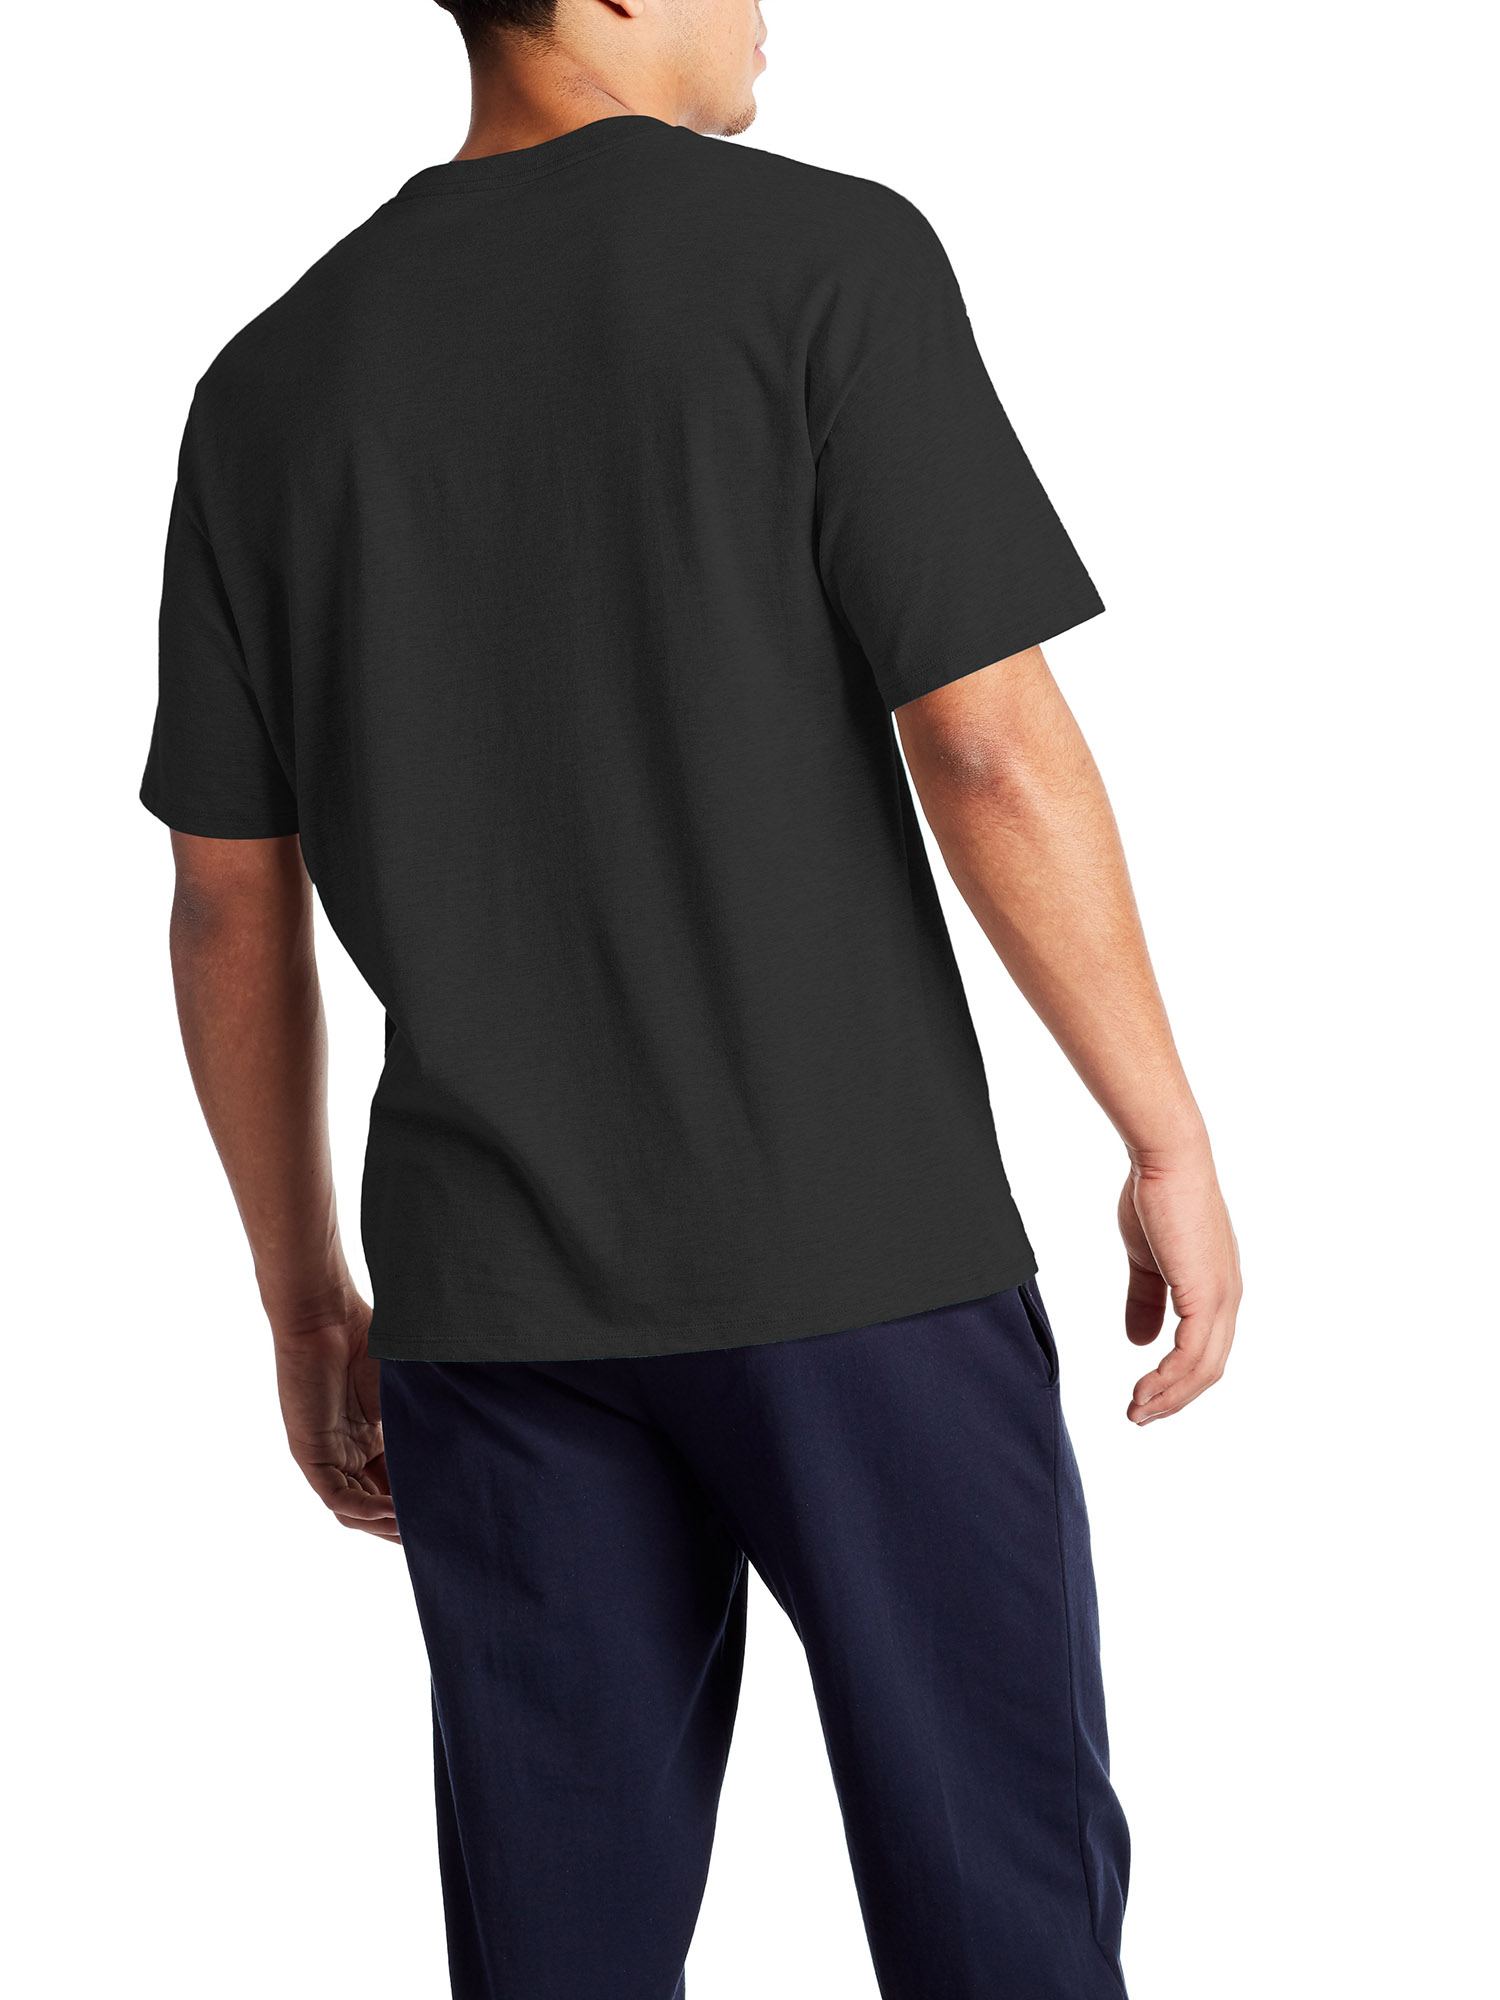 Champion Men's Classic Script Camo Graphic T-Shirt, Sizes S-2XL - image 3 of 5